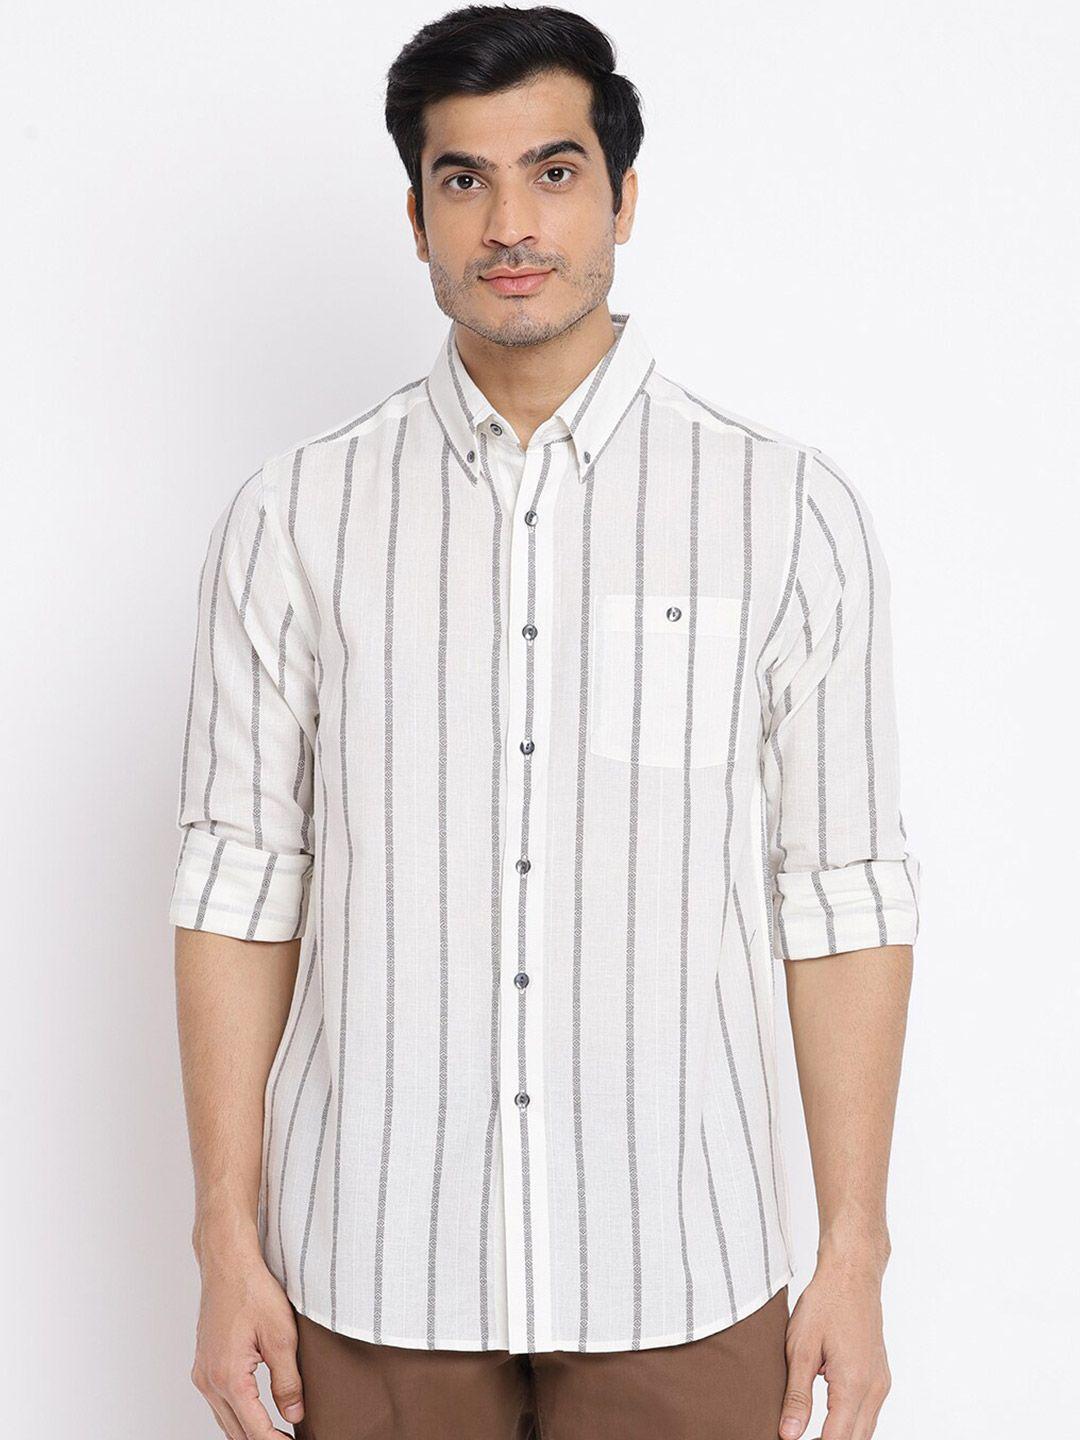 fabindia-men-white-striped-cotton-casual-shirt